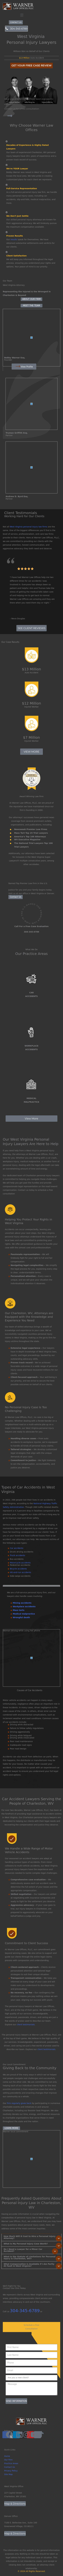 Warner Law Offices PLLC - Charleston WV Lawyers